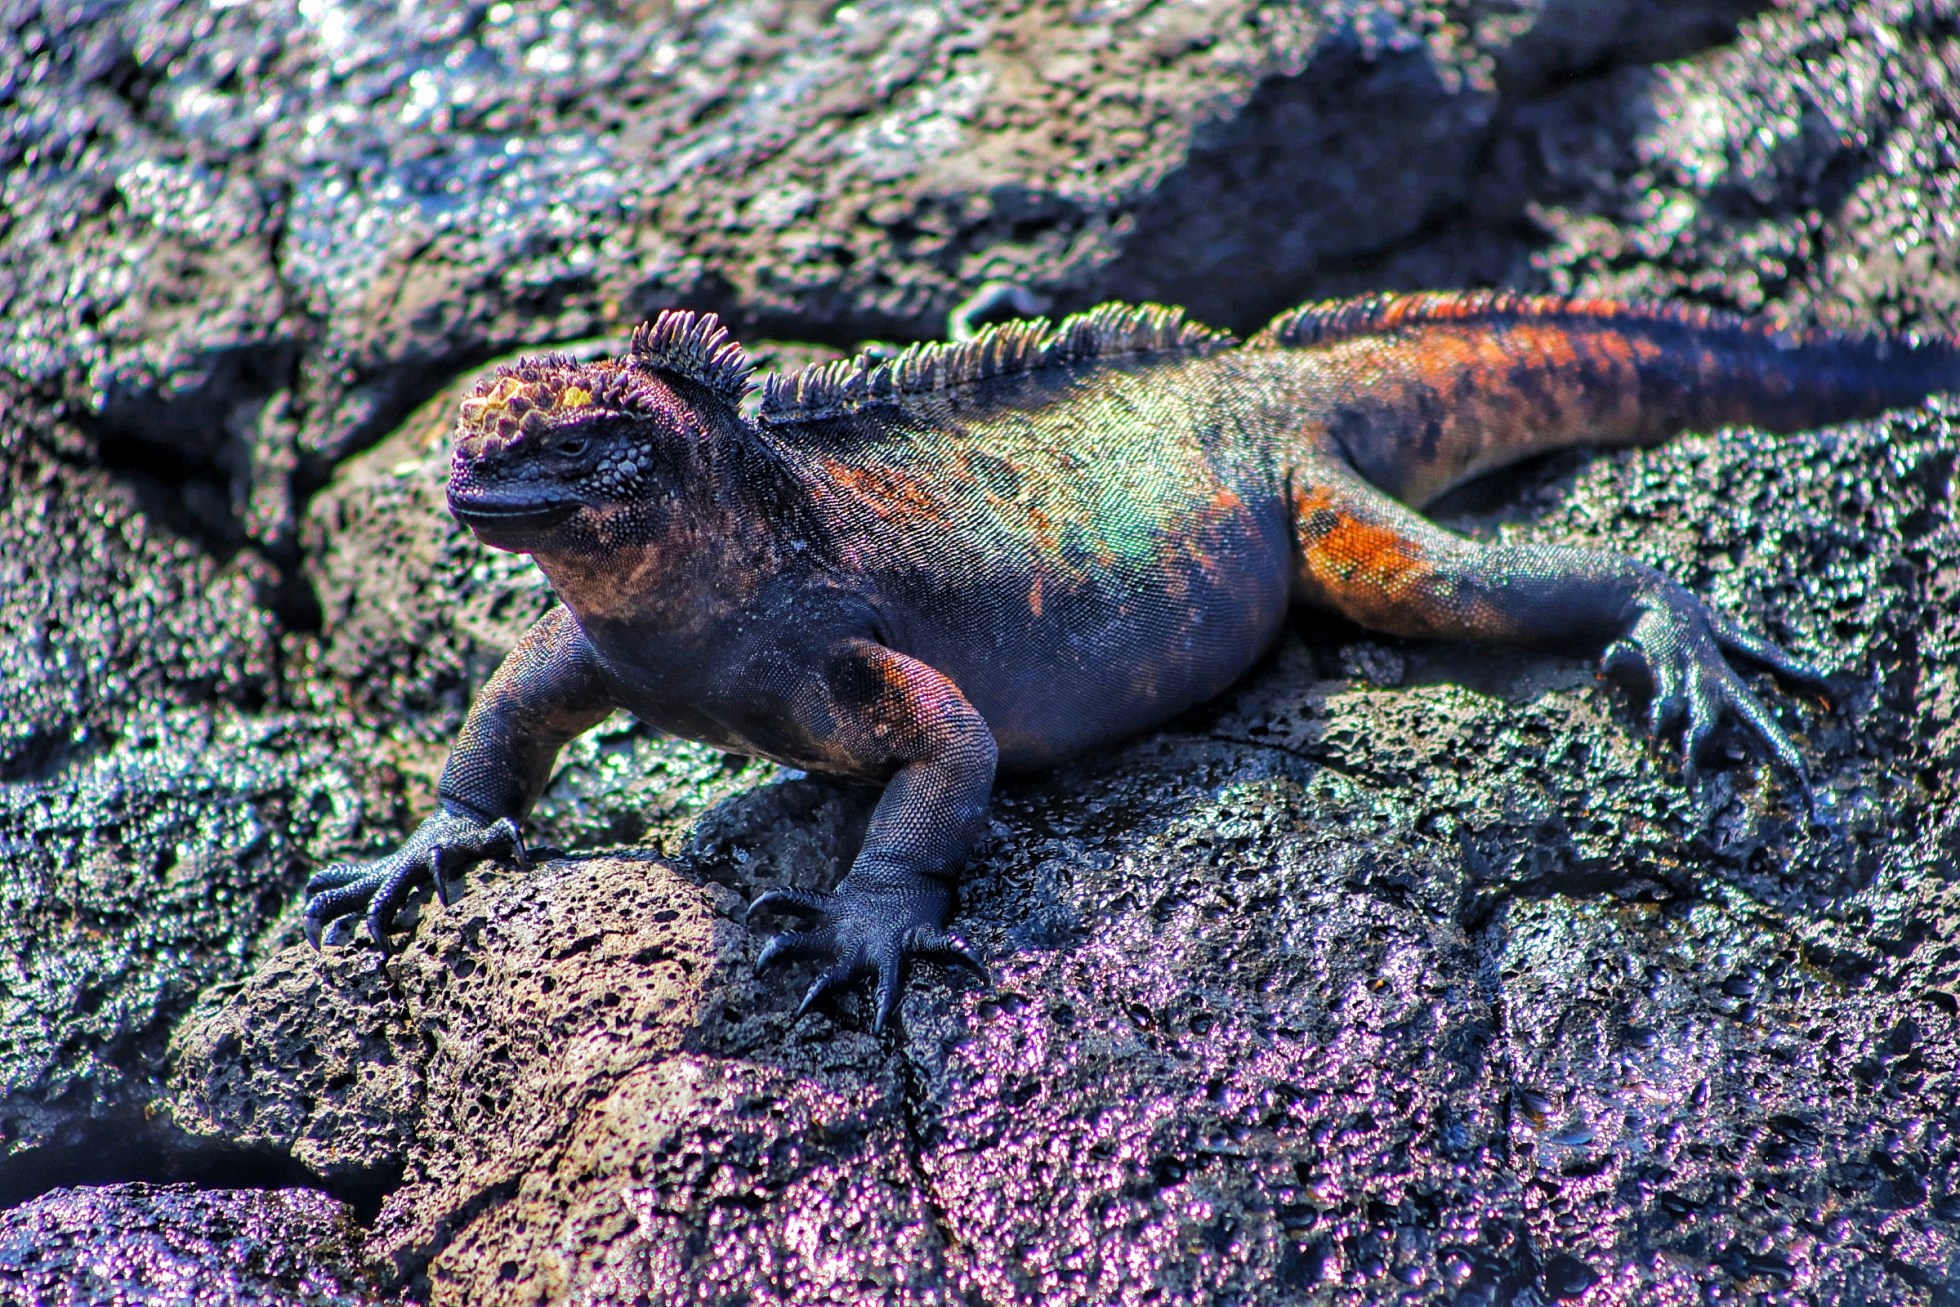 A marine iguana suns itself